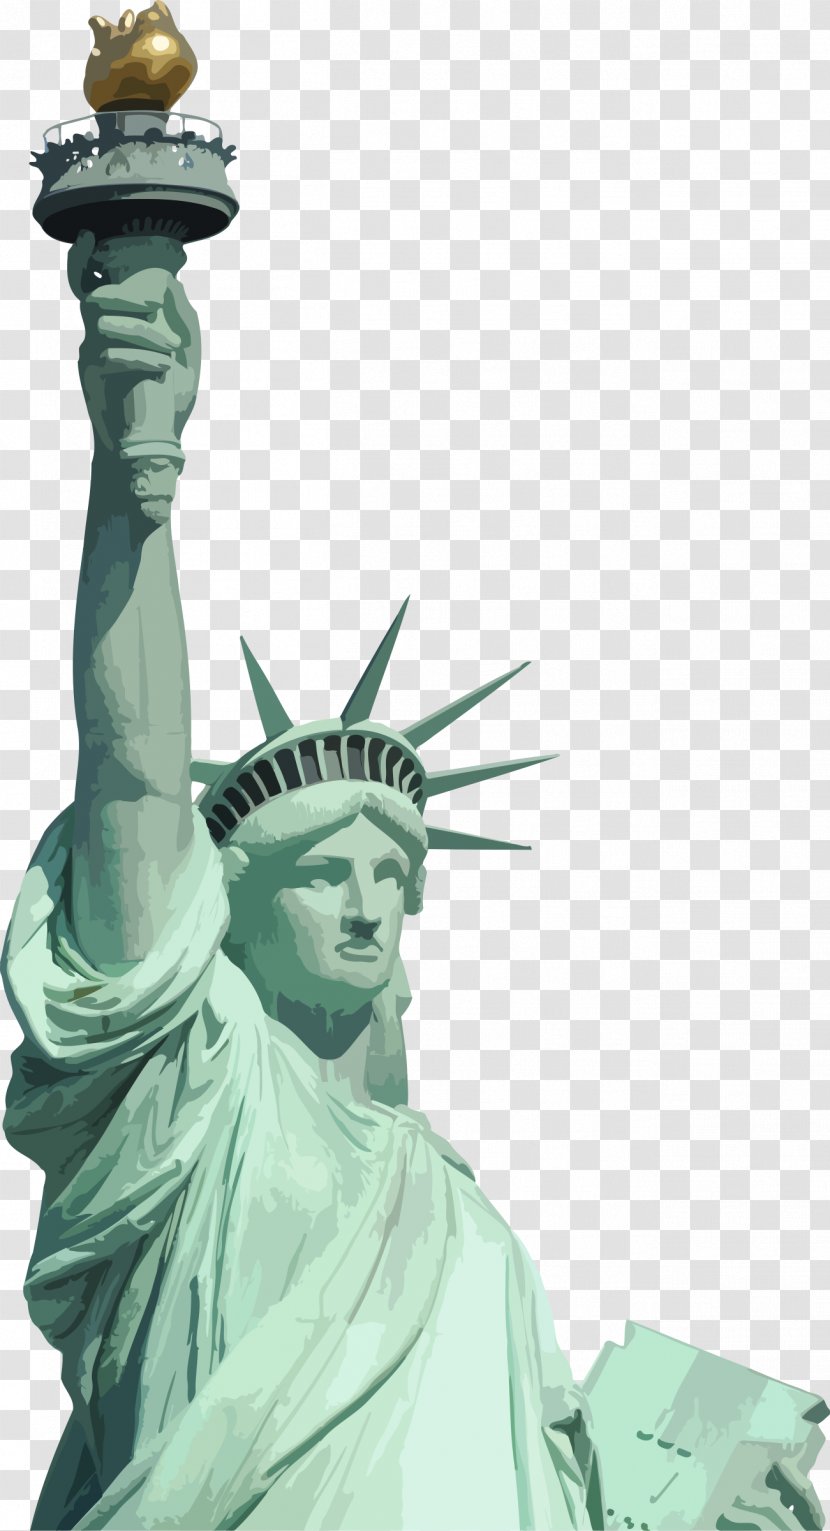 Statue Of Liberty - Classical Sculpture Transparent PNG